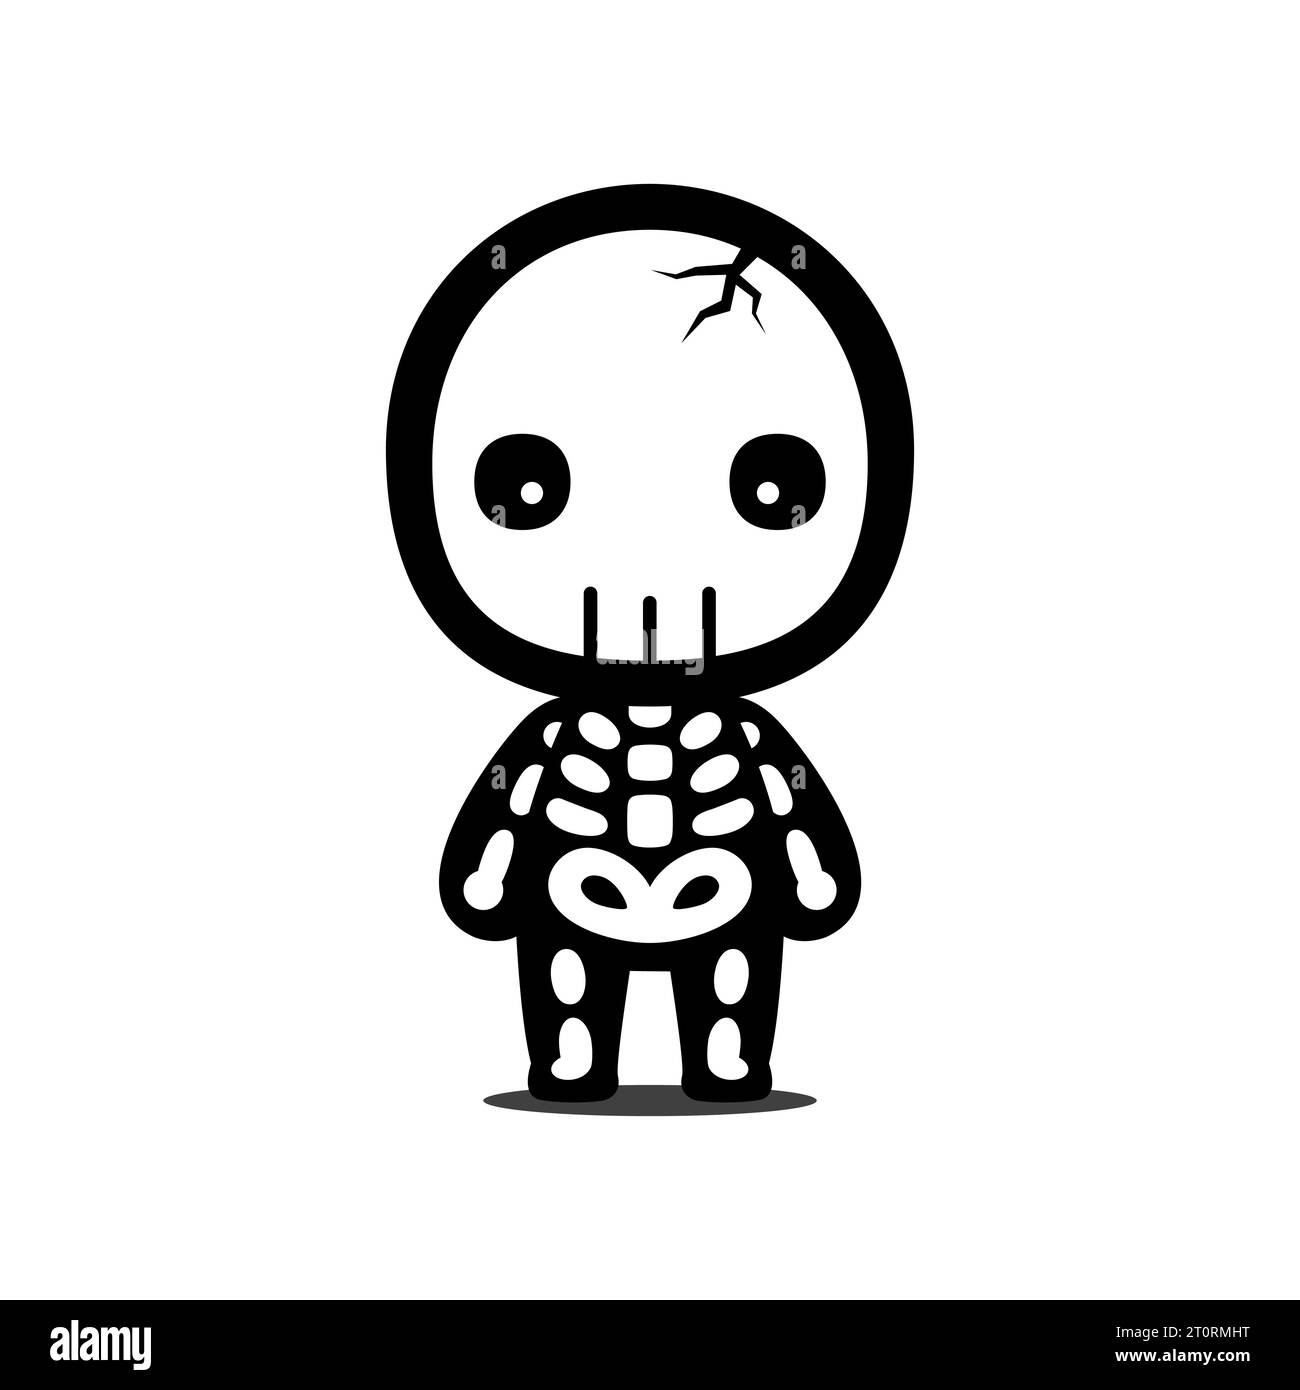 Mignon et Kawaii style Halloween Skull Cartoon personnage Illustration de Vecteur